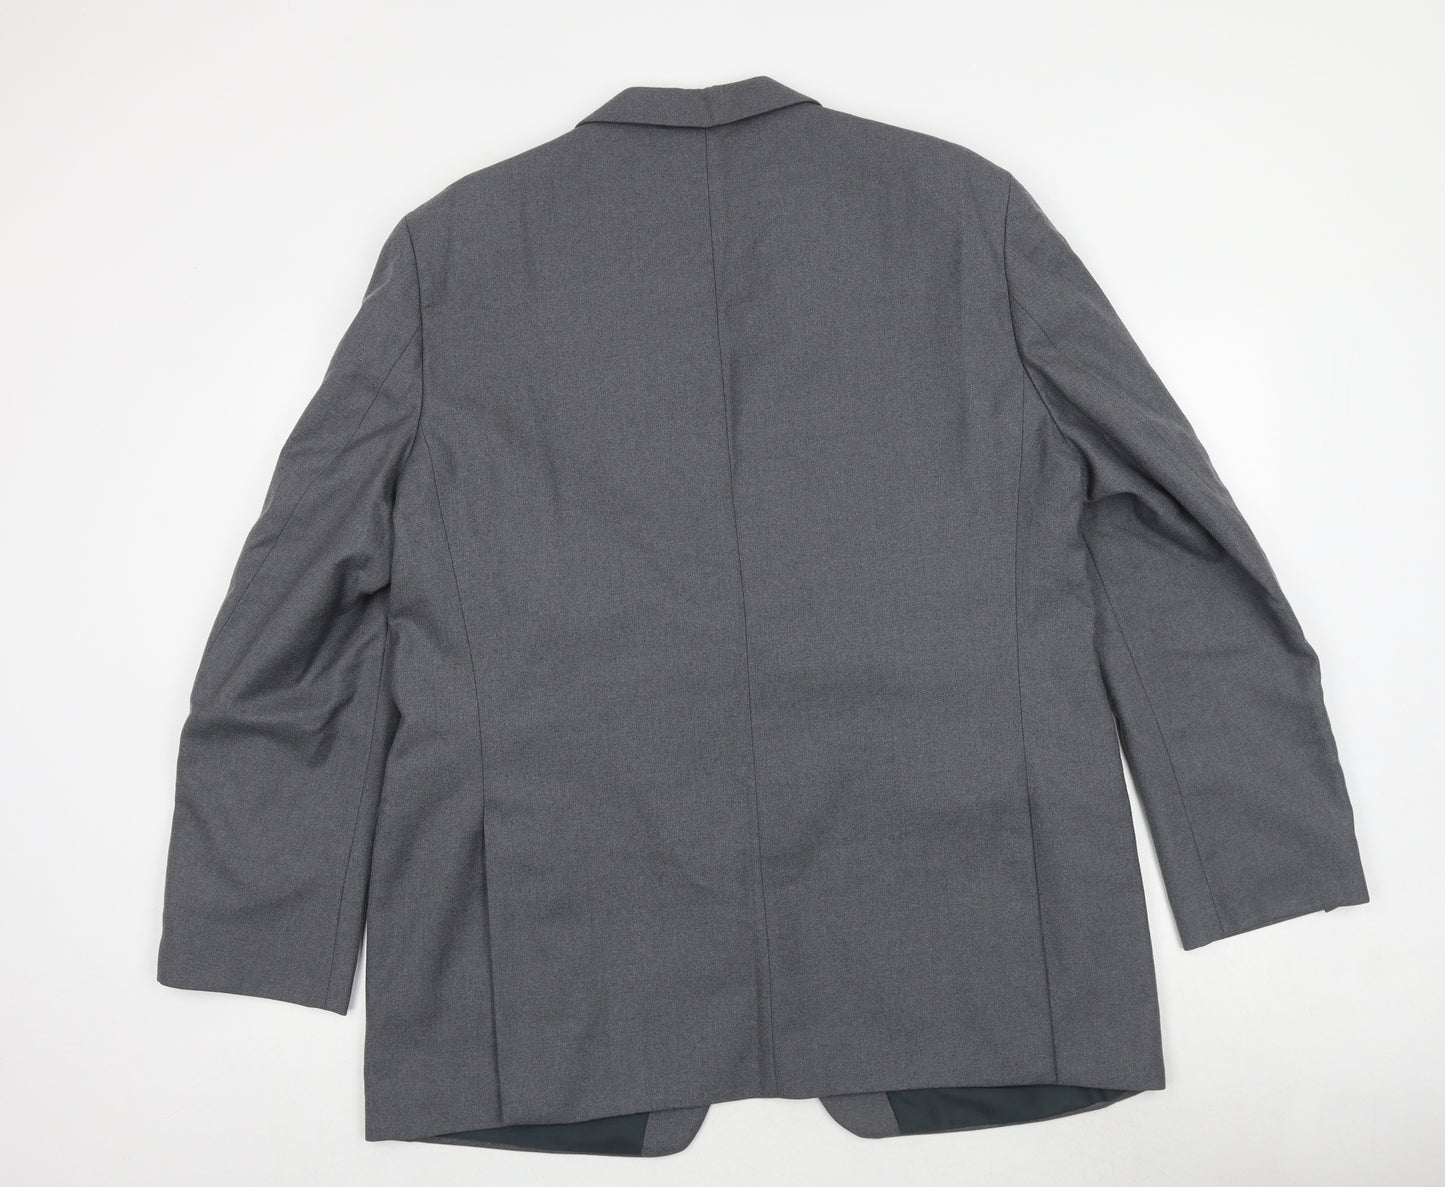 Grendale Mens Grey Wool Jacket Suit Jacket Size 44 Regular